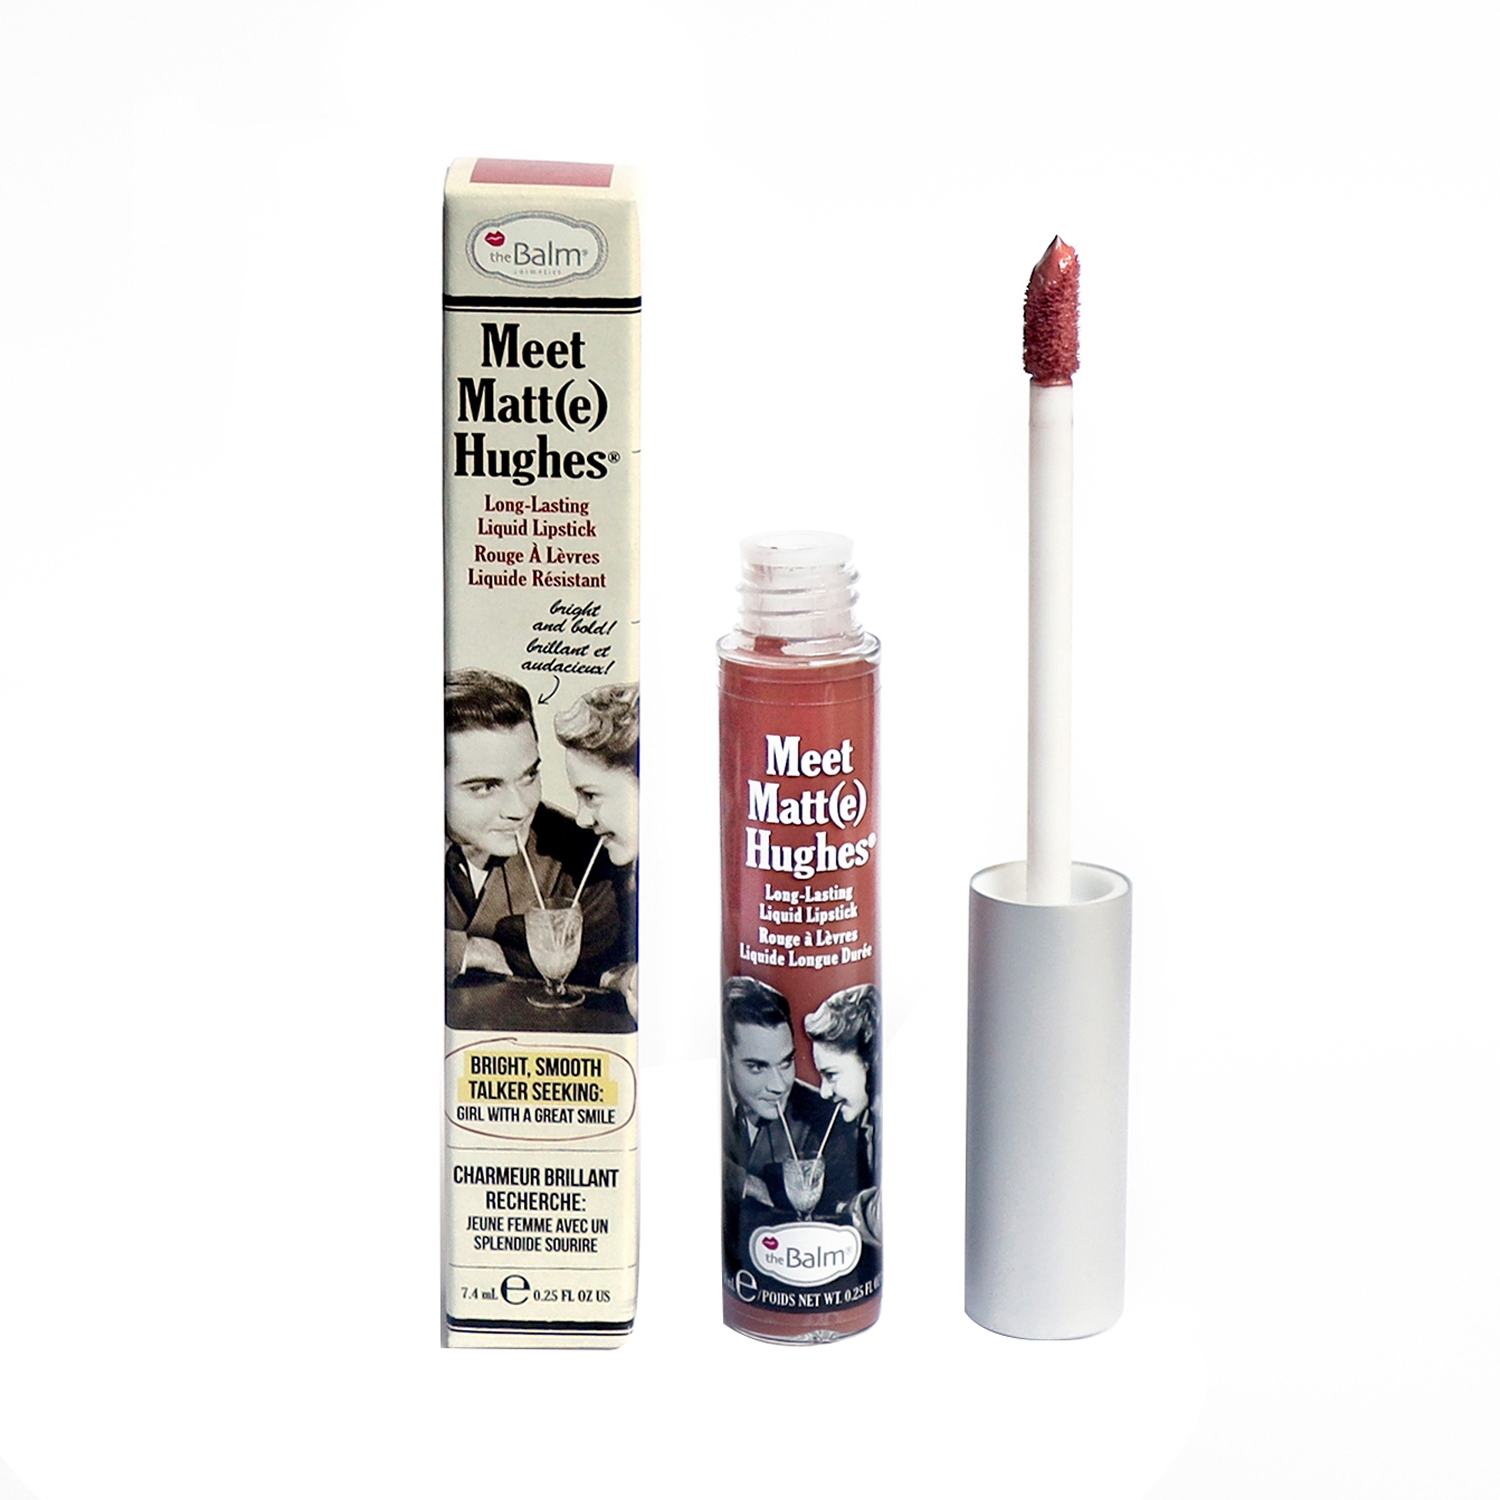 theBalm Cosmetics | theBalm Cosmetics Meet Matte Hughes Liquid Lipstick - Generous (7.4ml)